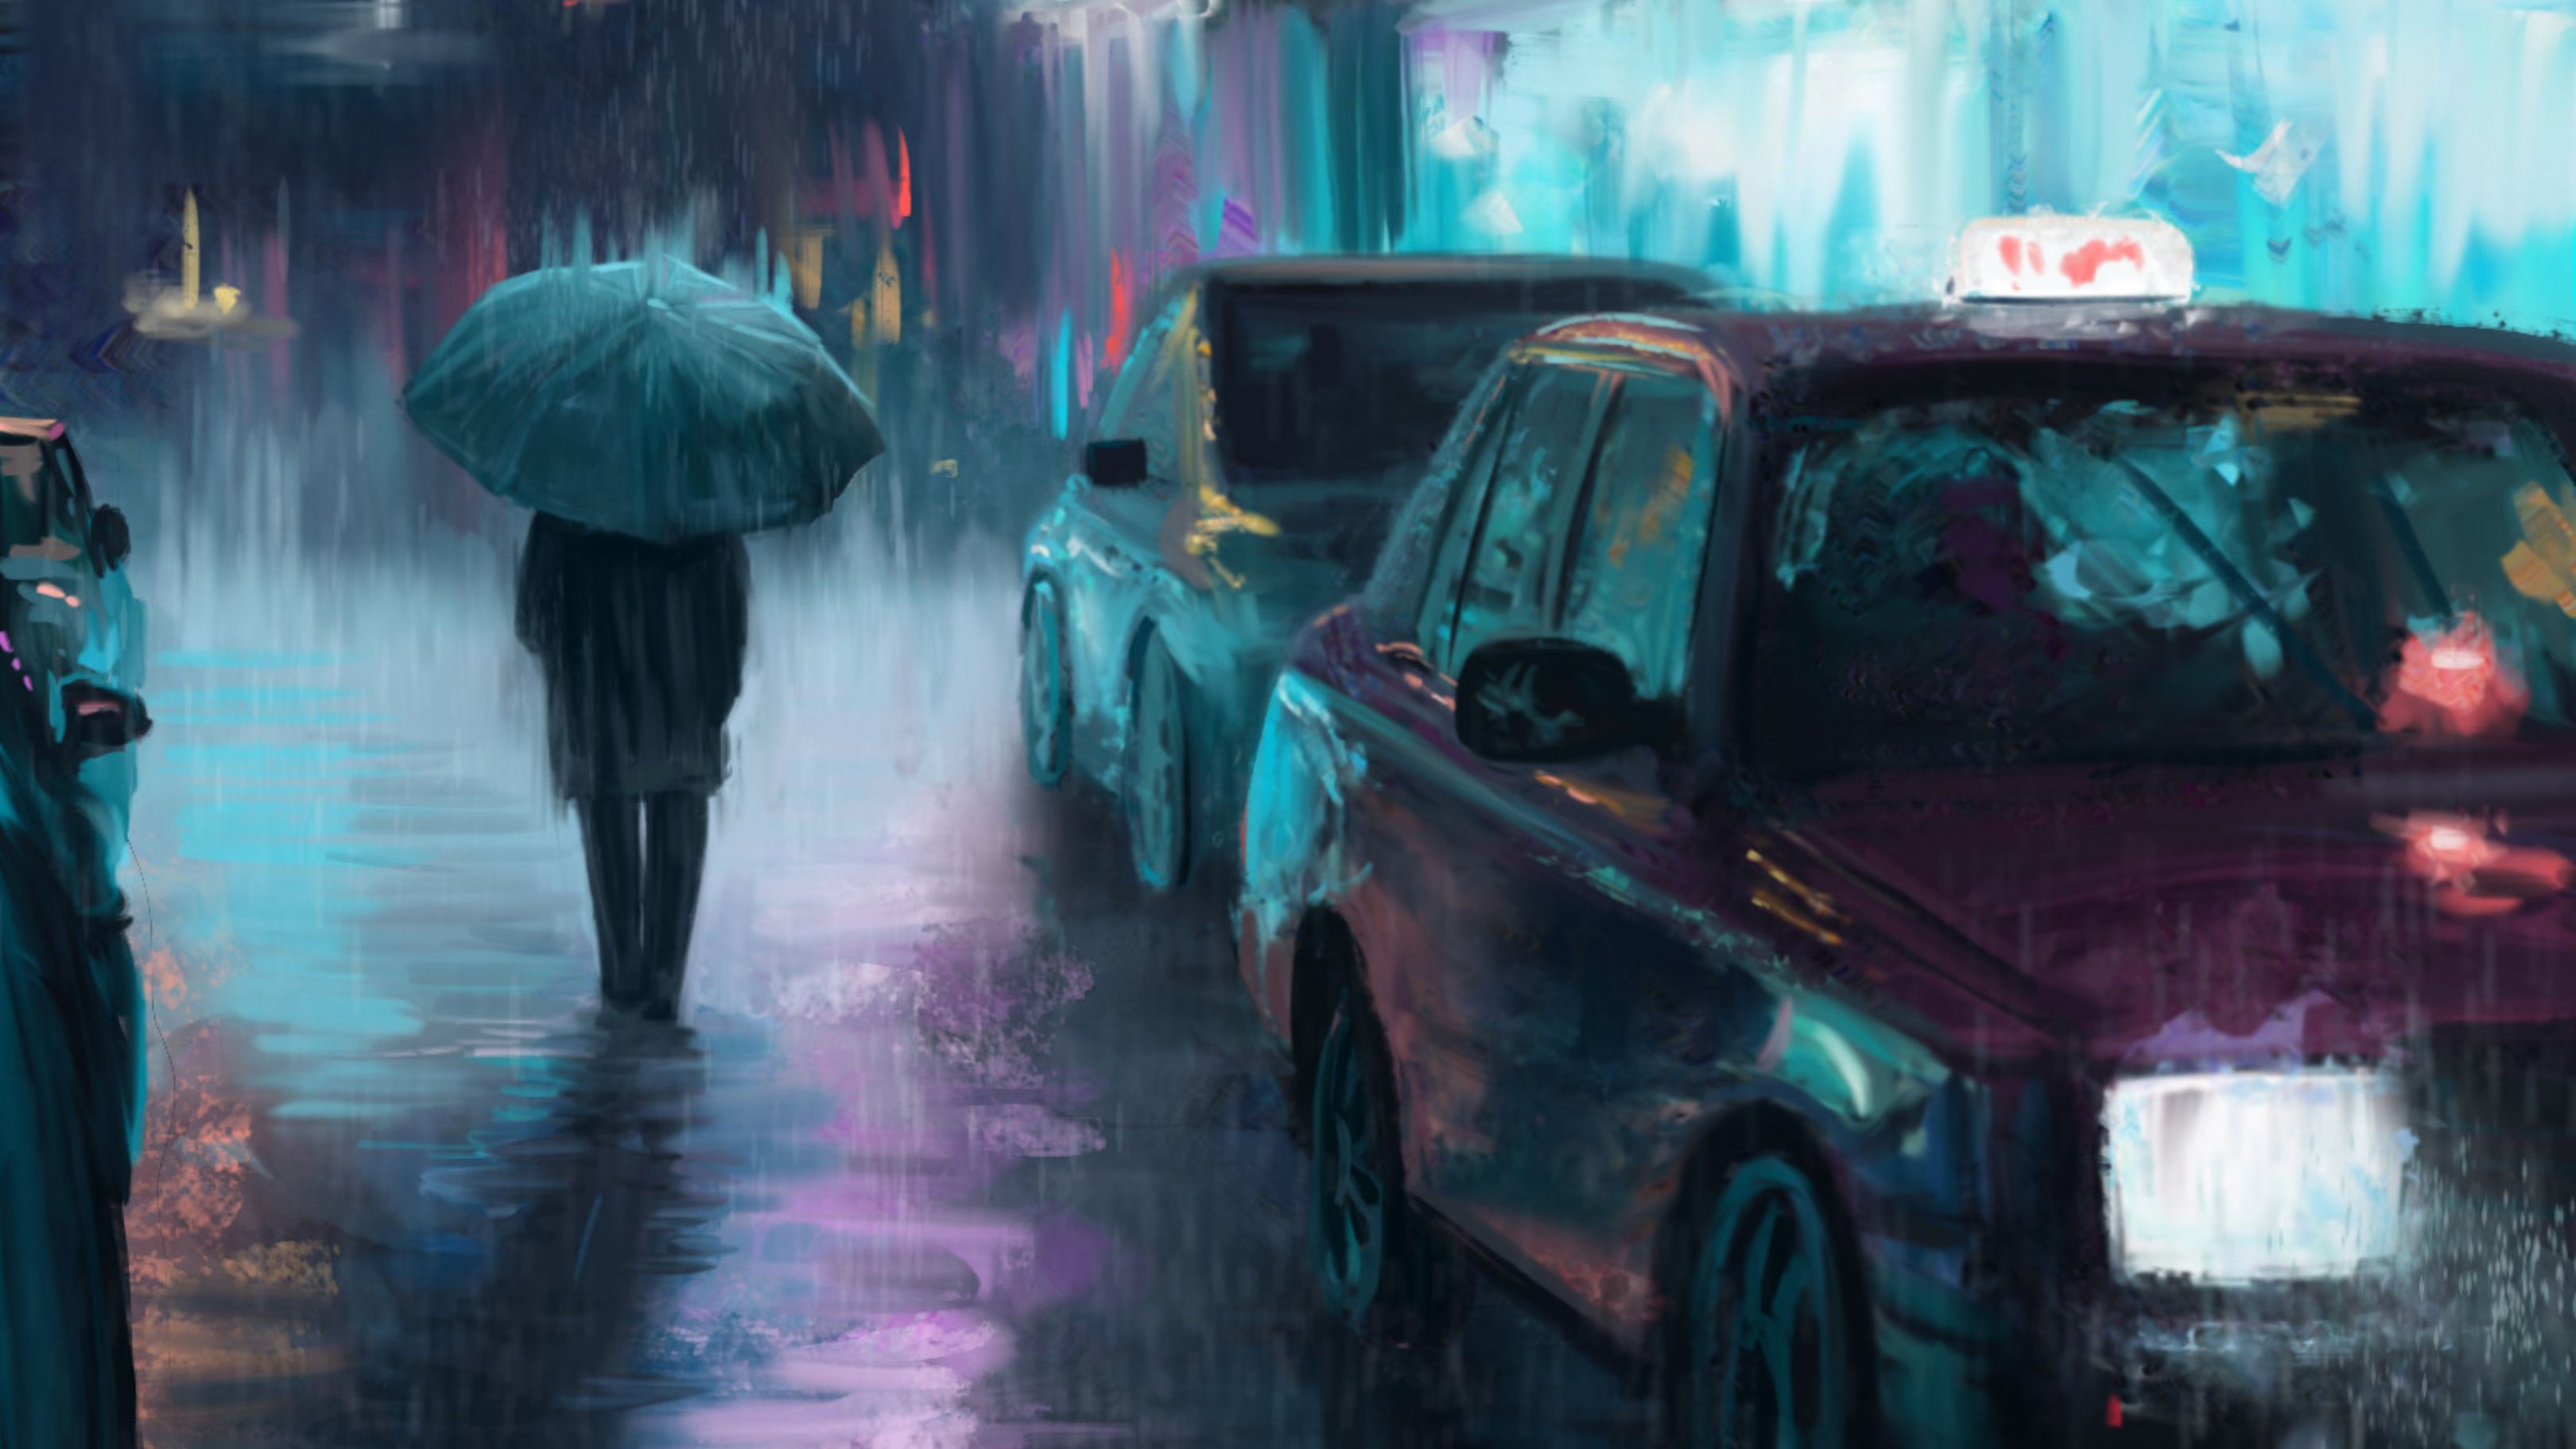 Night City Rain Art, HD Artist, 4k Wallpaper, Image, Background, Photo and Picture